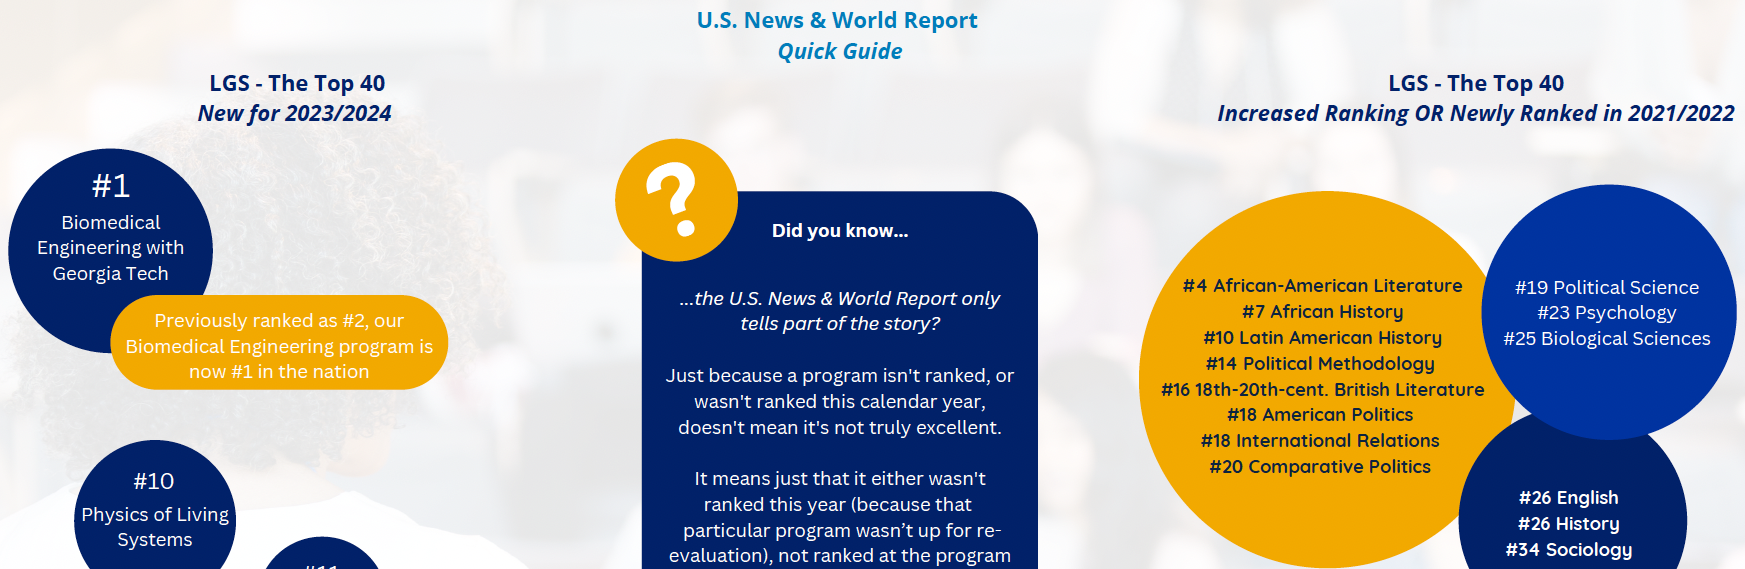 U.S News and World Rankings